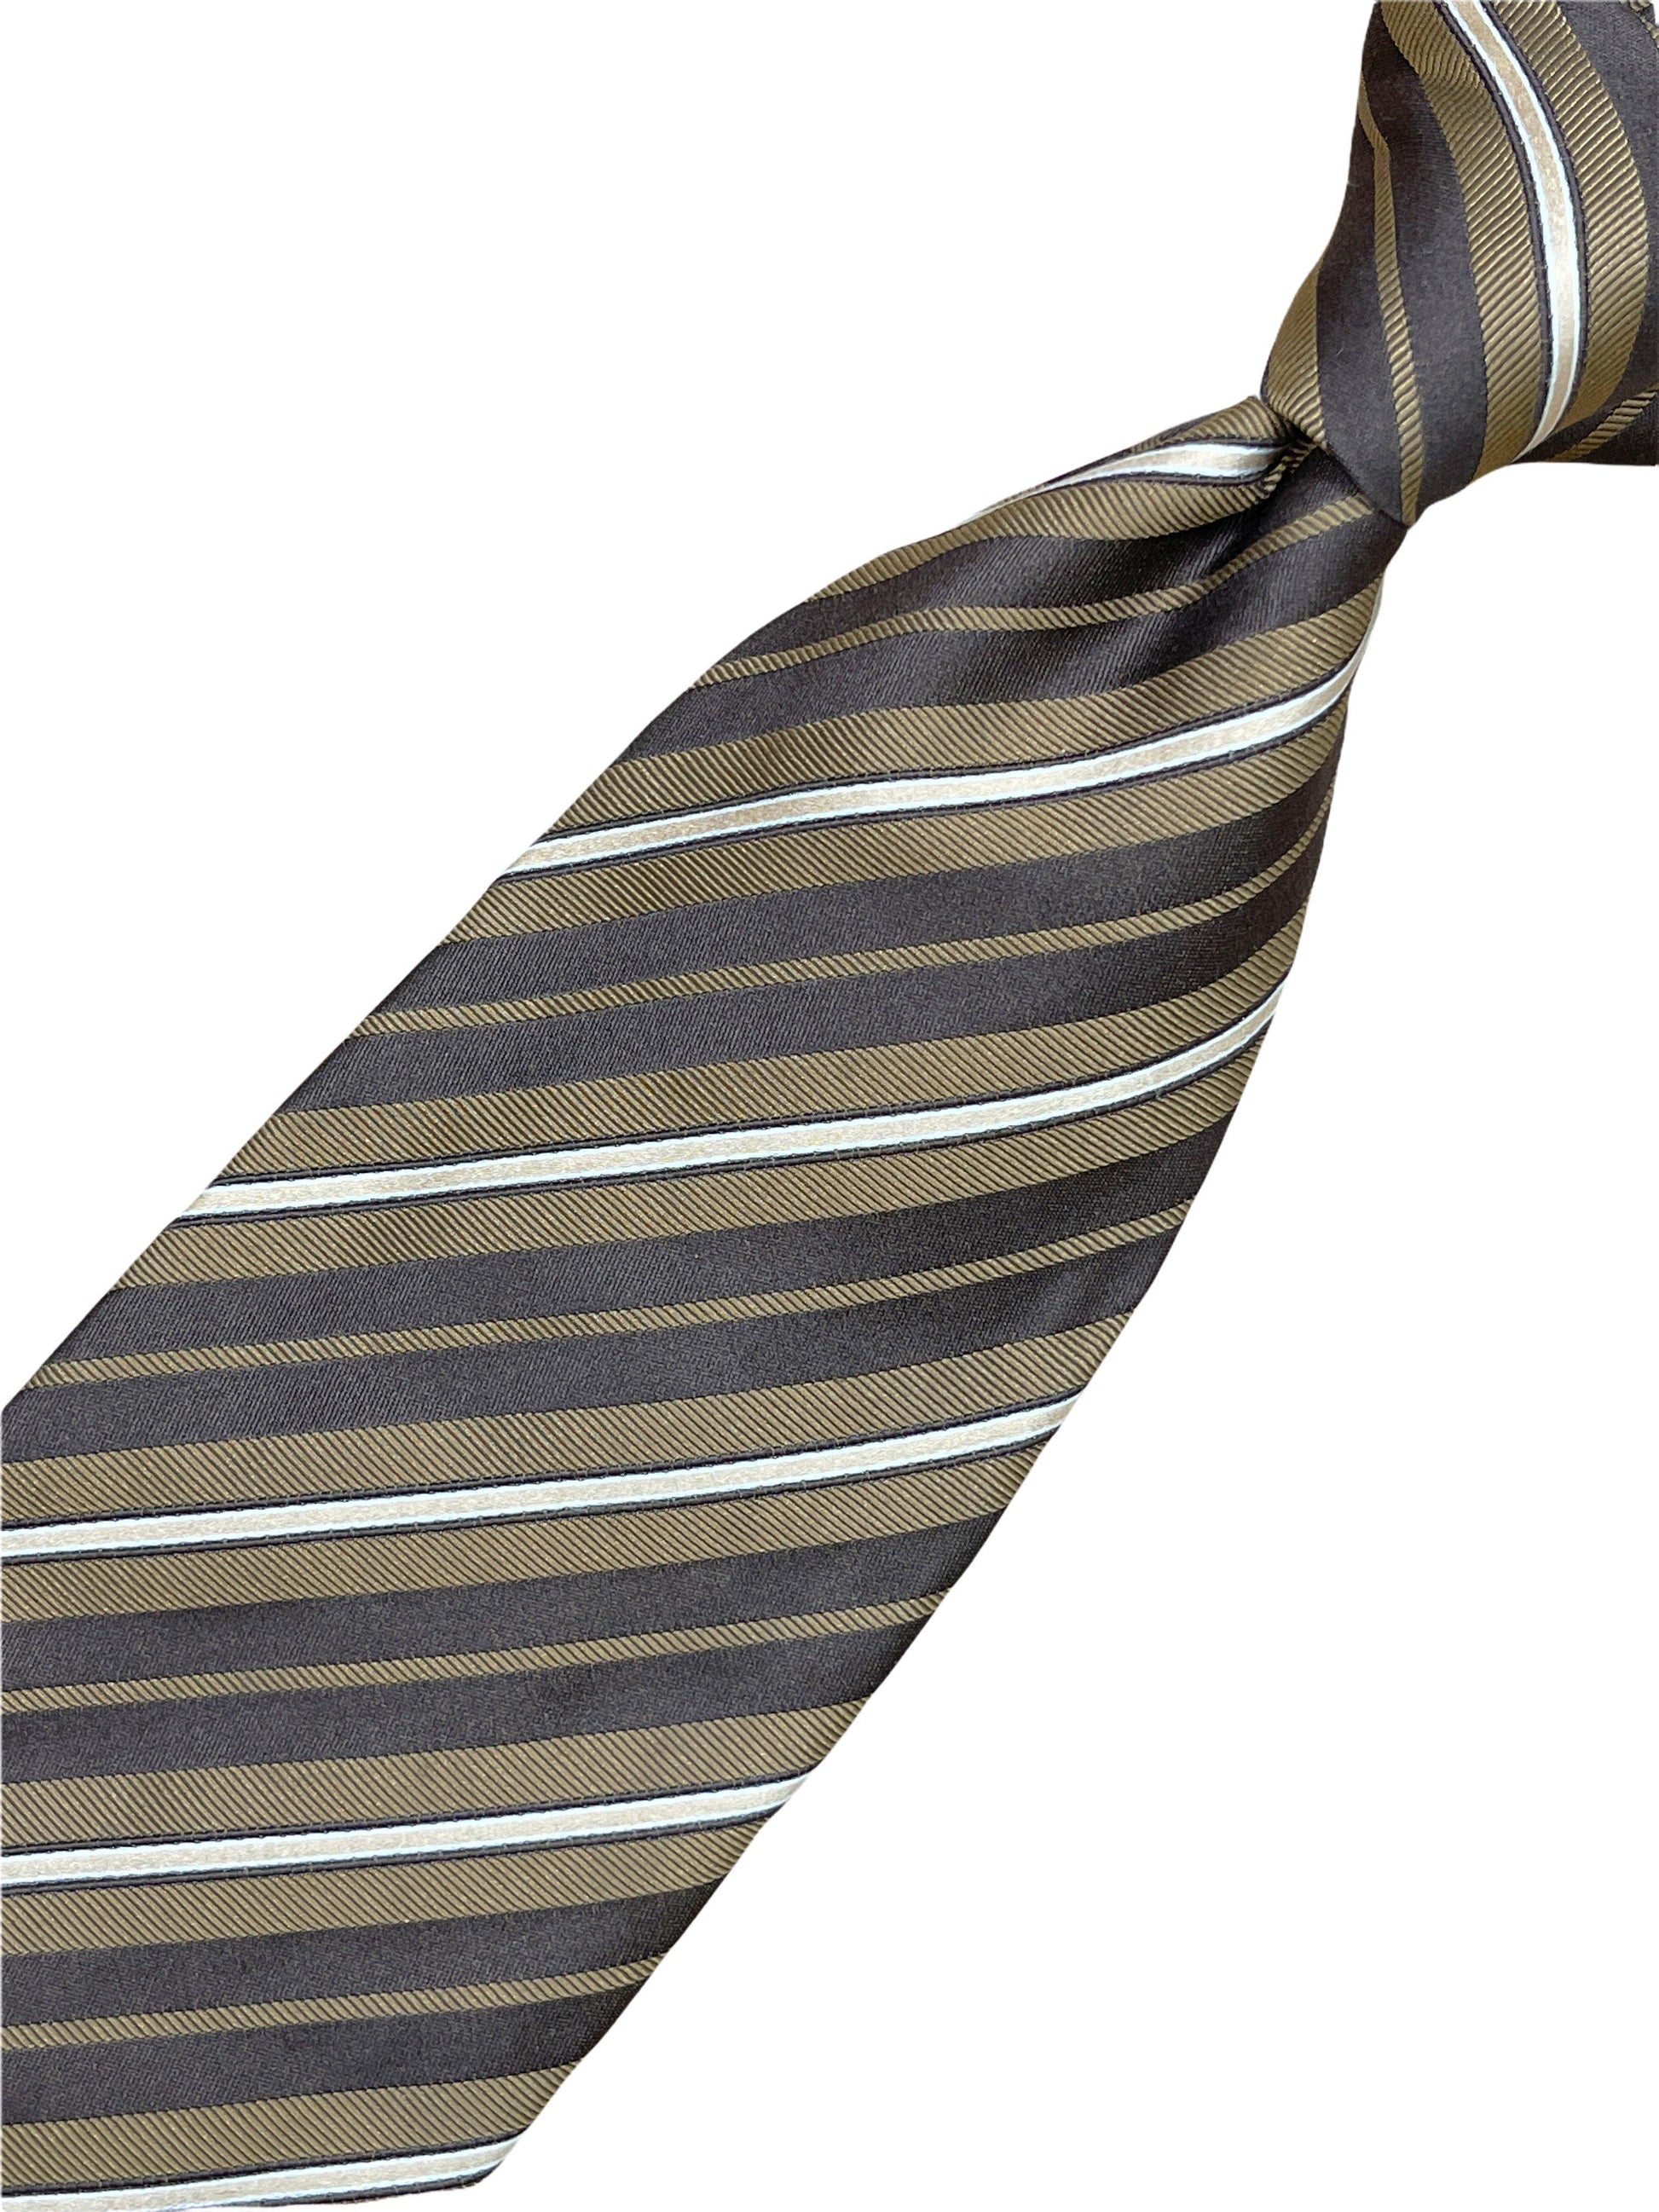 hugo boss striped silk tie